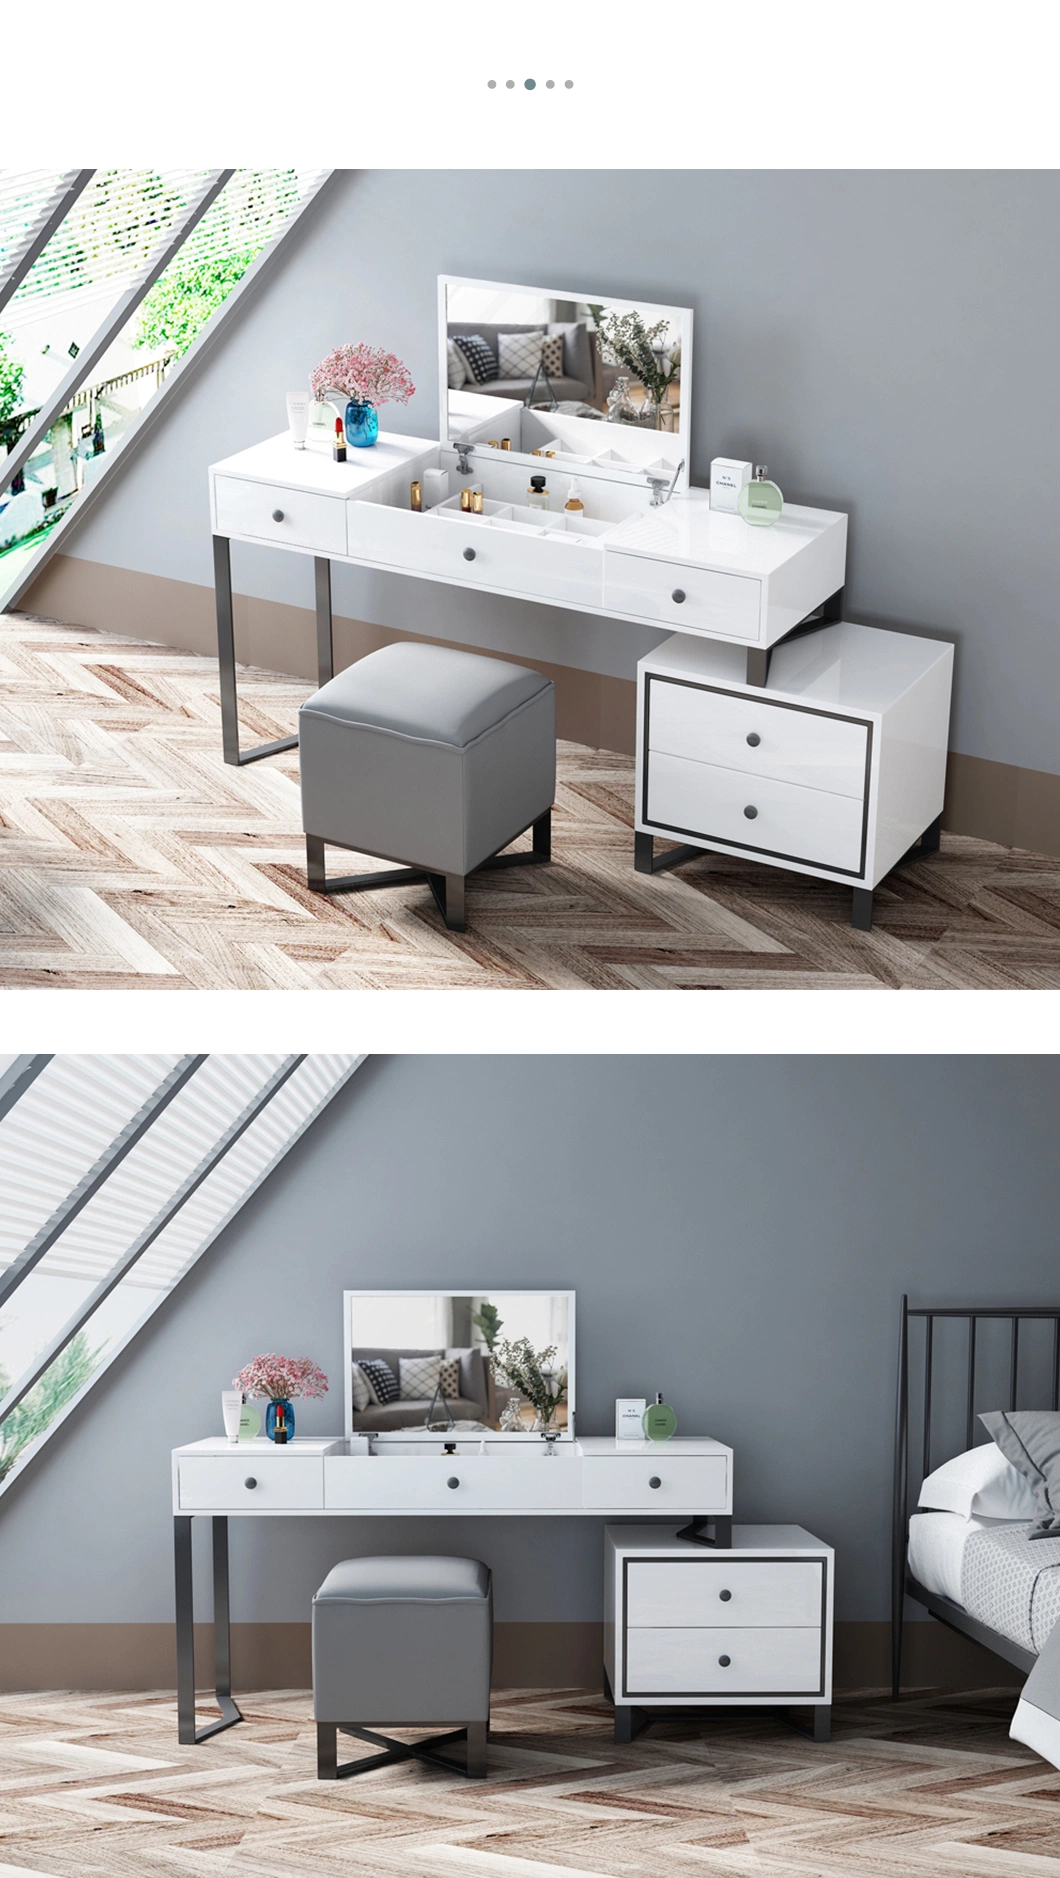 Wholesales Modern Minimalist King Bed Wooden Bedroom Furniture